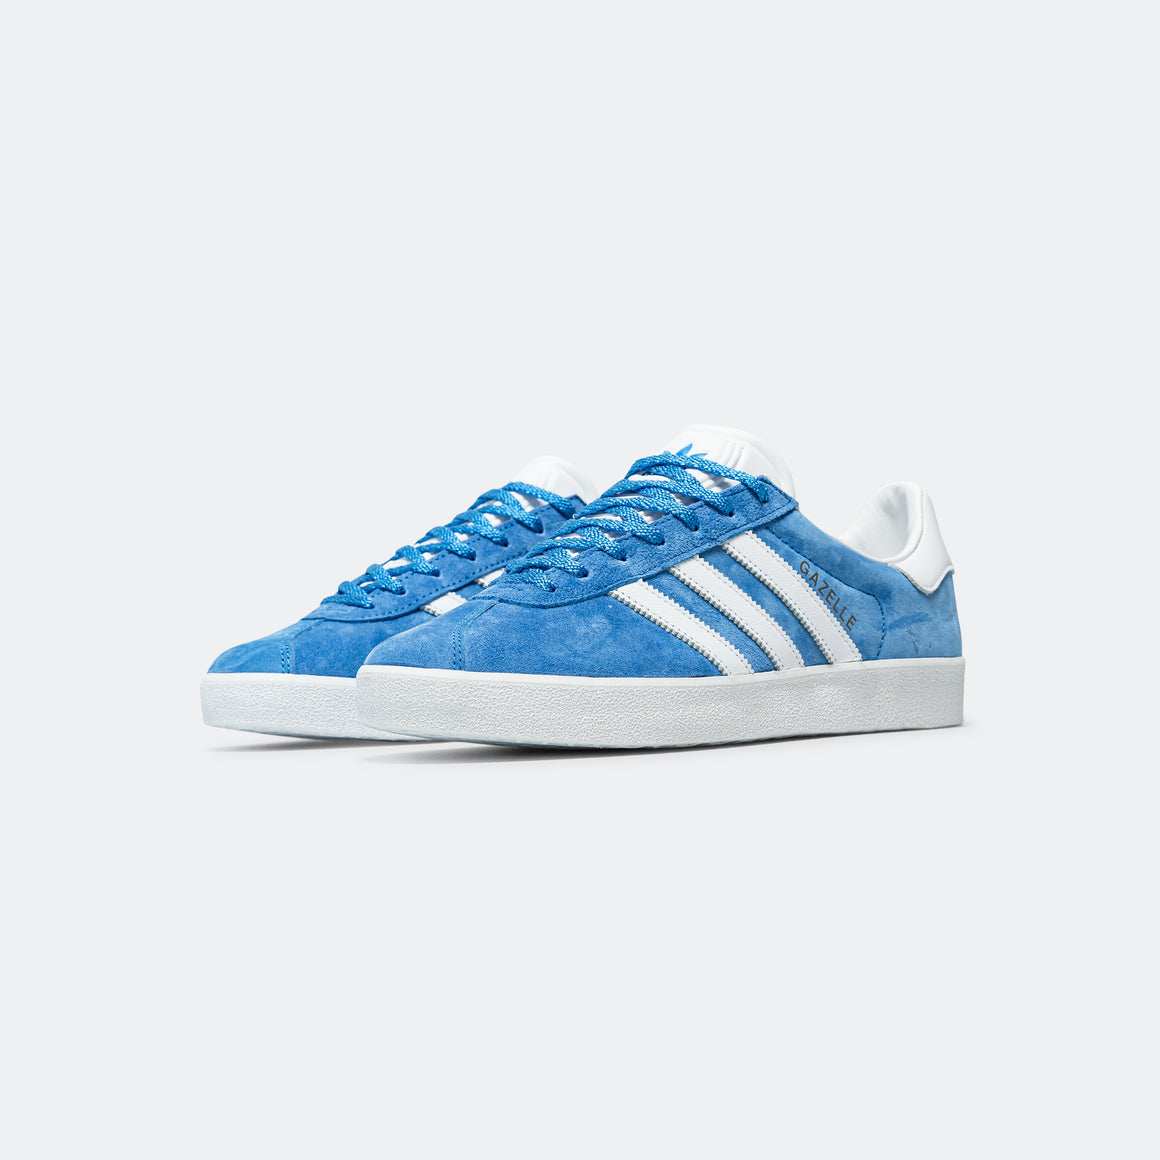 adidas - Gazelle 85 - Bluebird/Footwear White - UP THERE